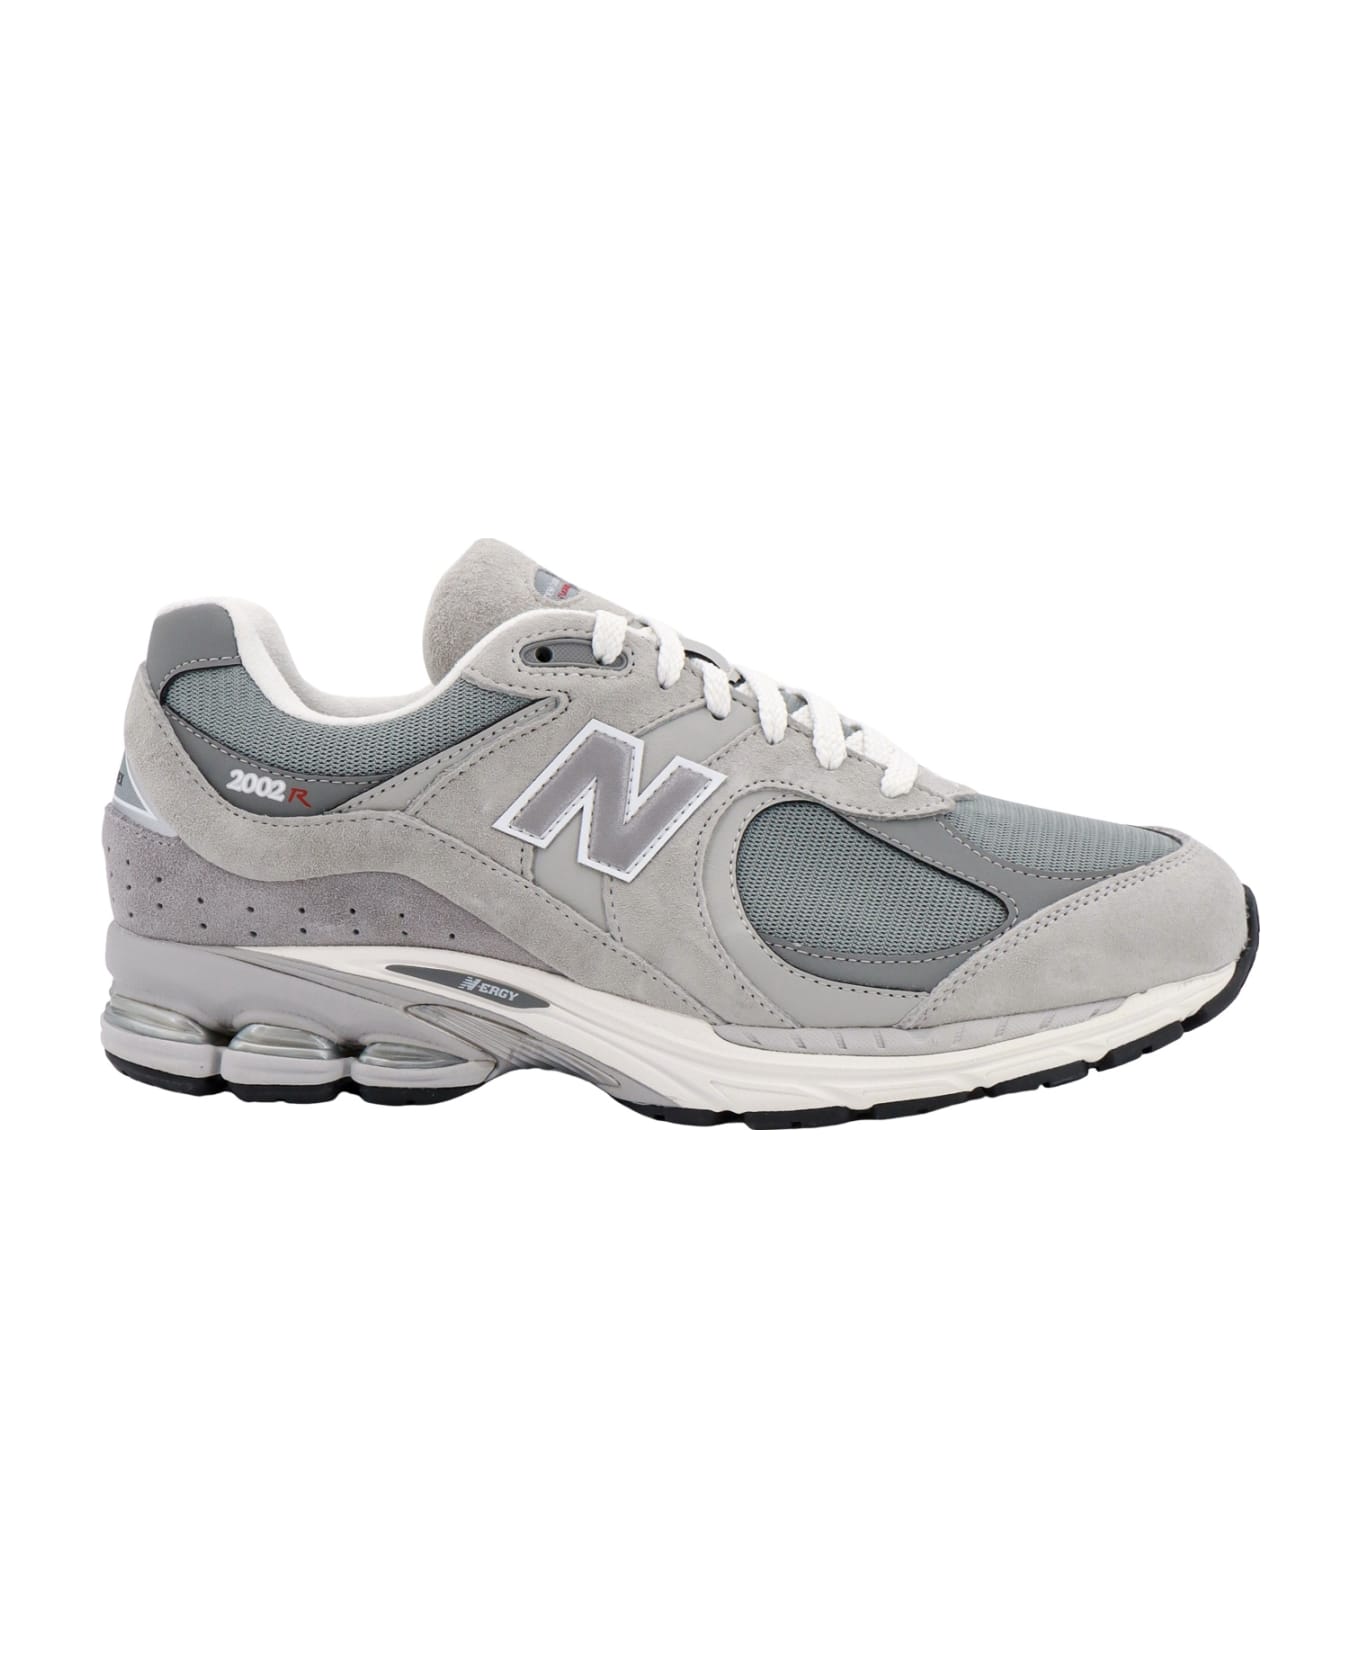 New Balance 2002 Sneakers - Grey